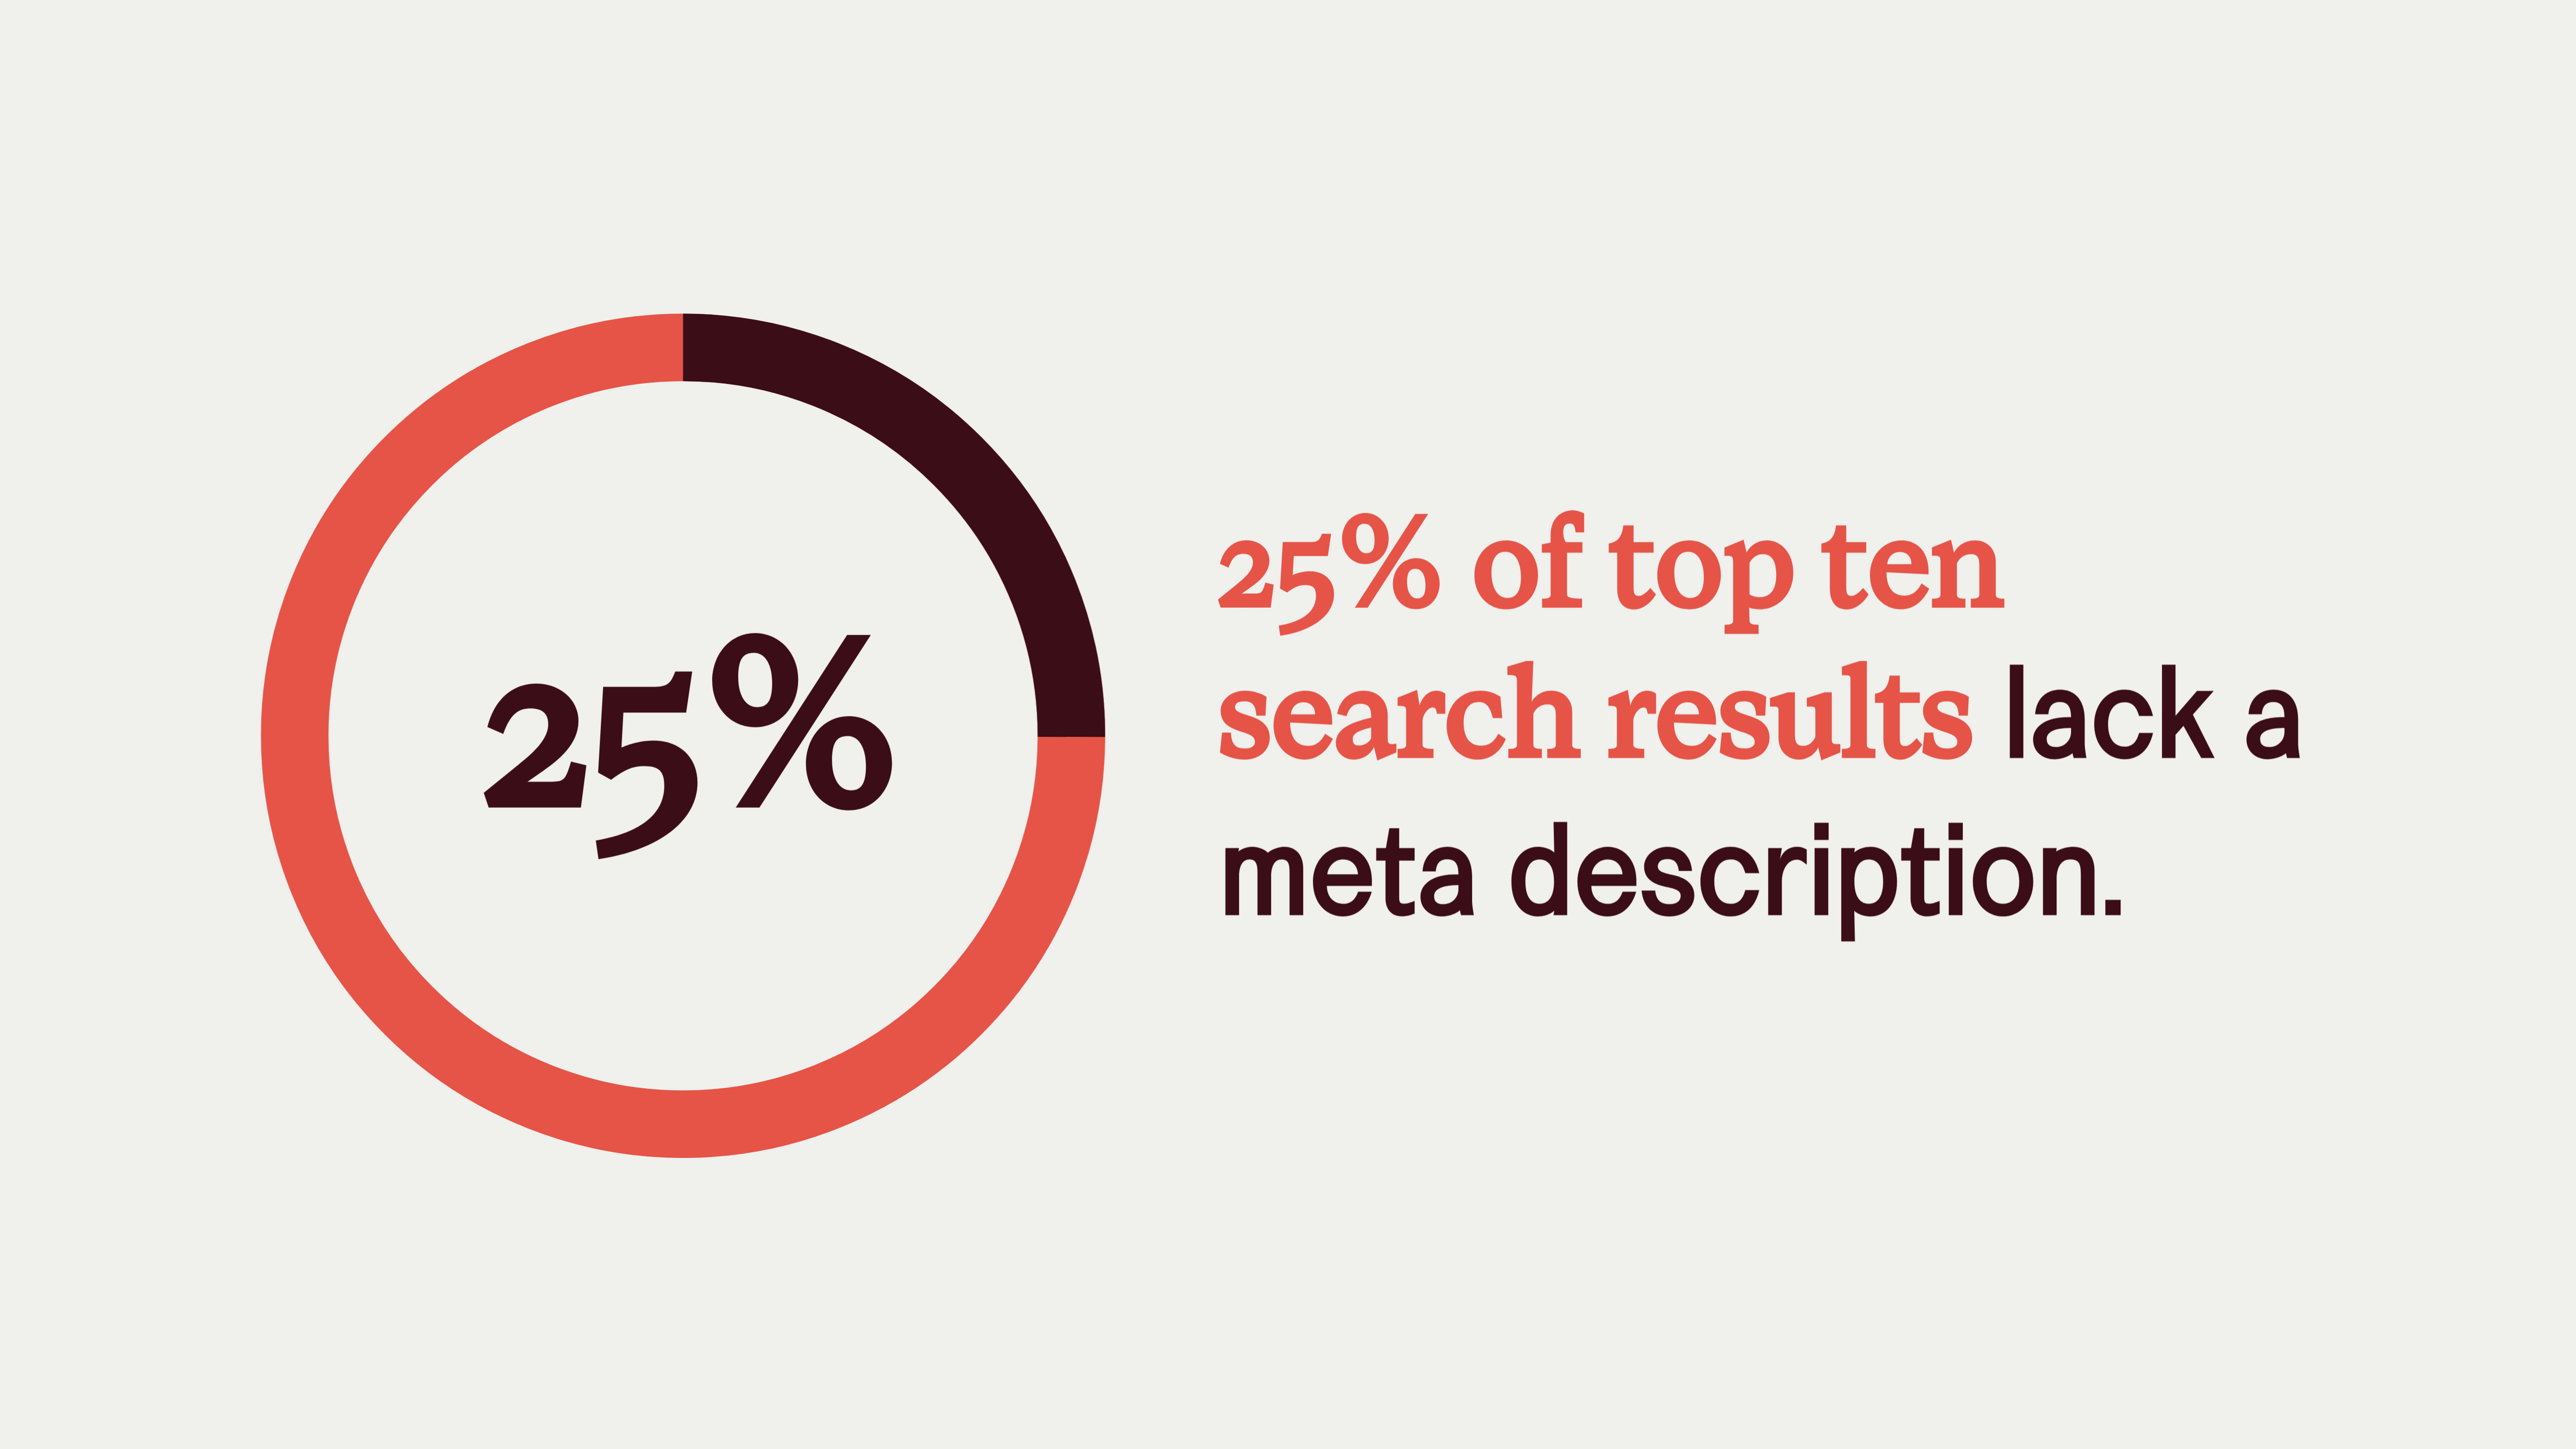 search engine optimization statistics text: 25% of top ten search results lack a meta description